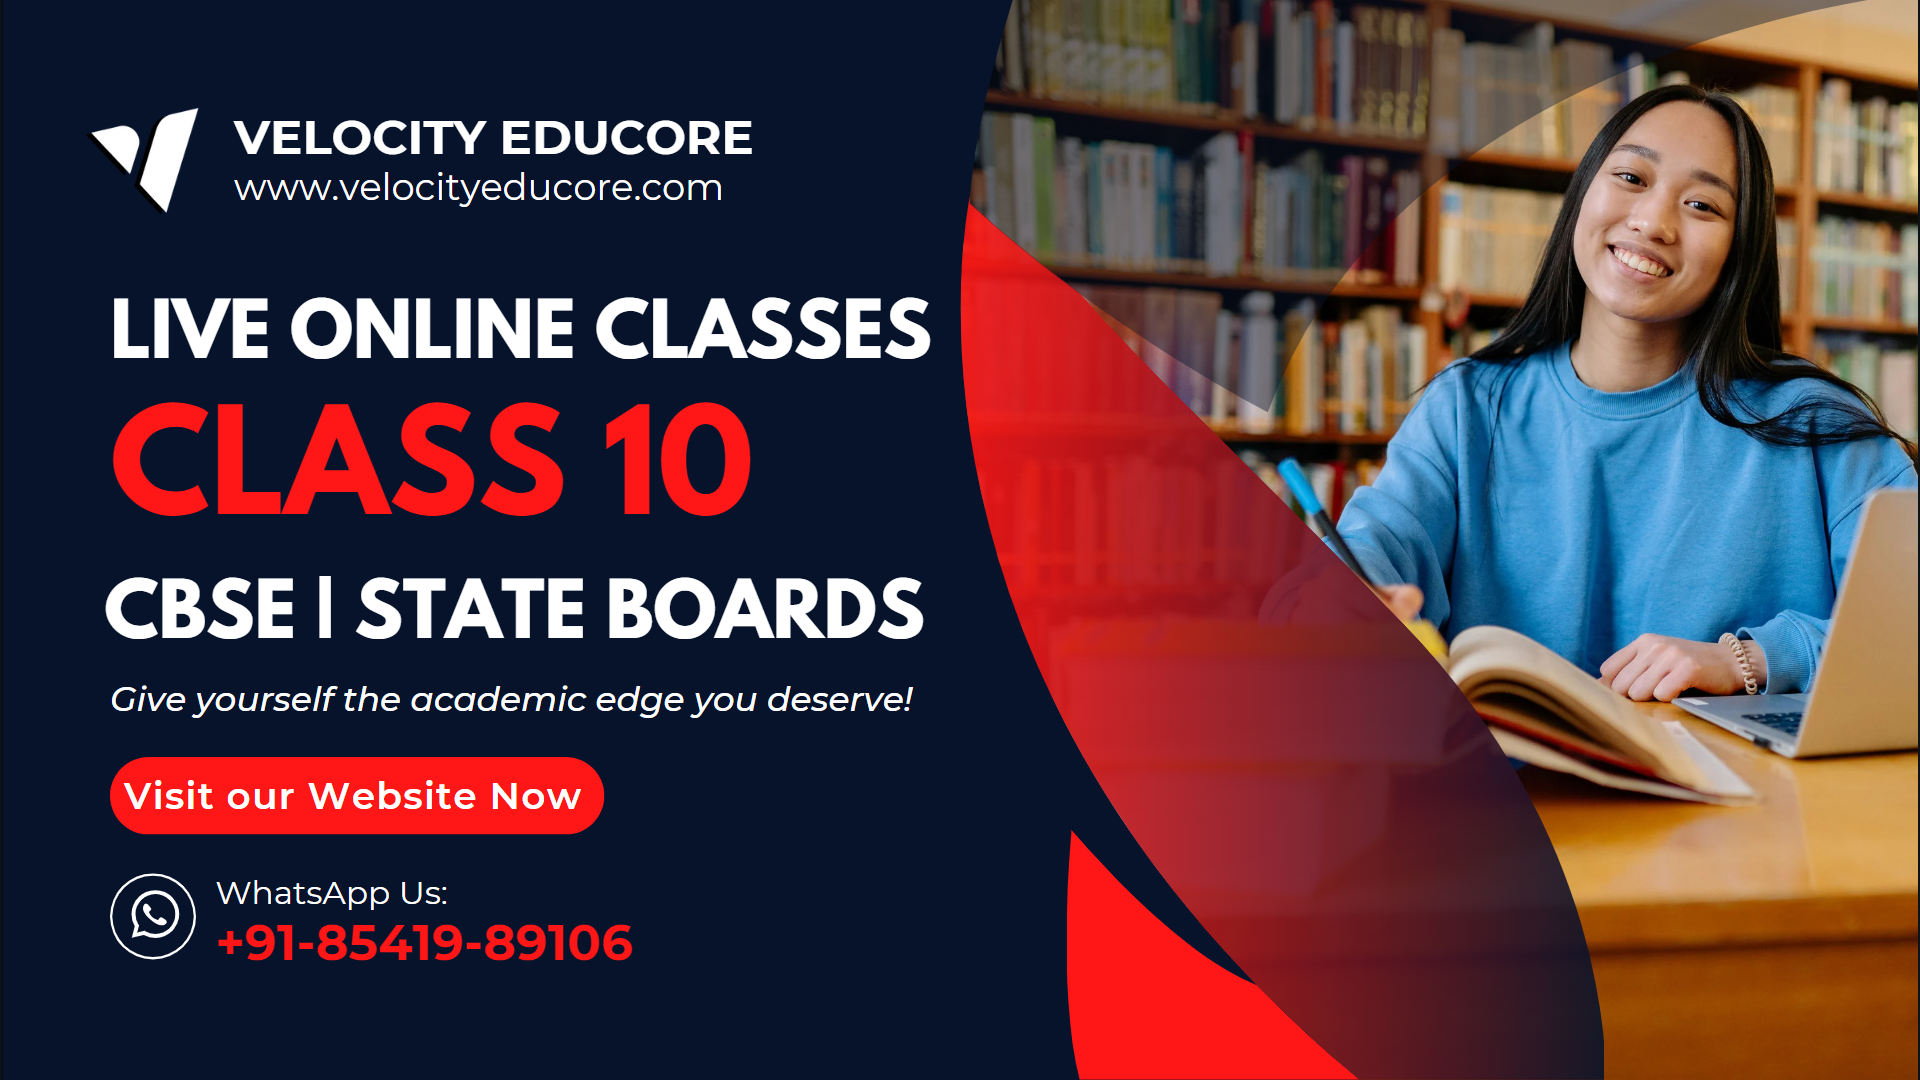 Class 10 Online Classes - Velocity Educore